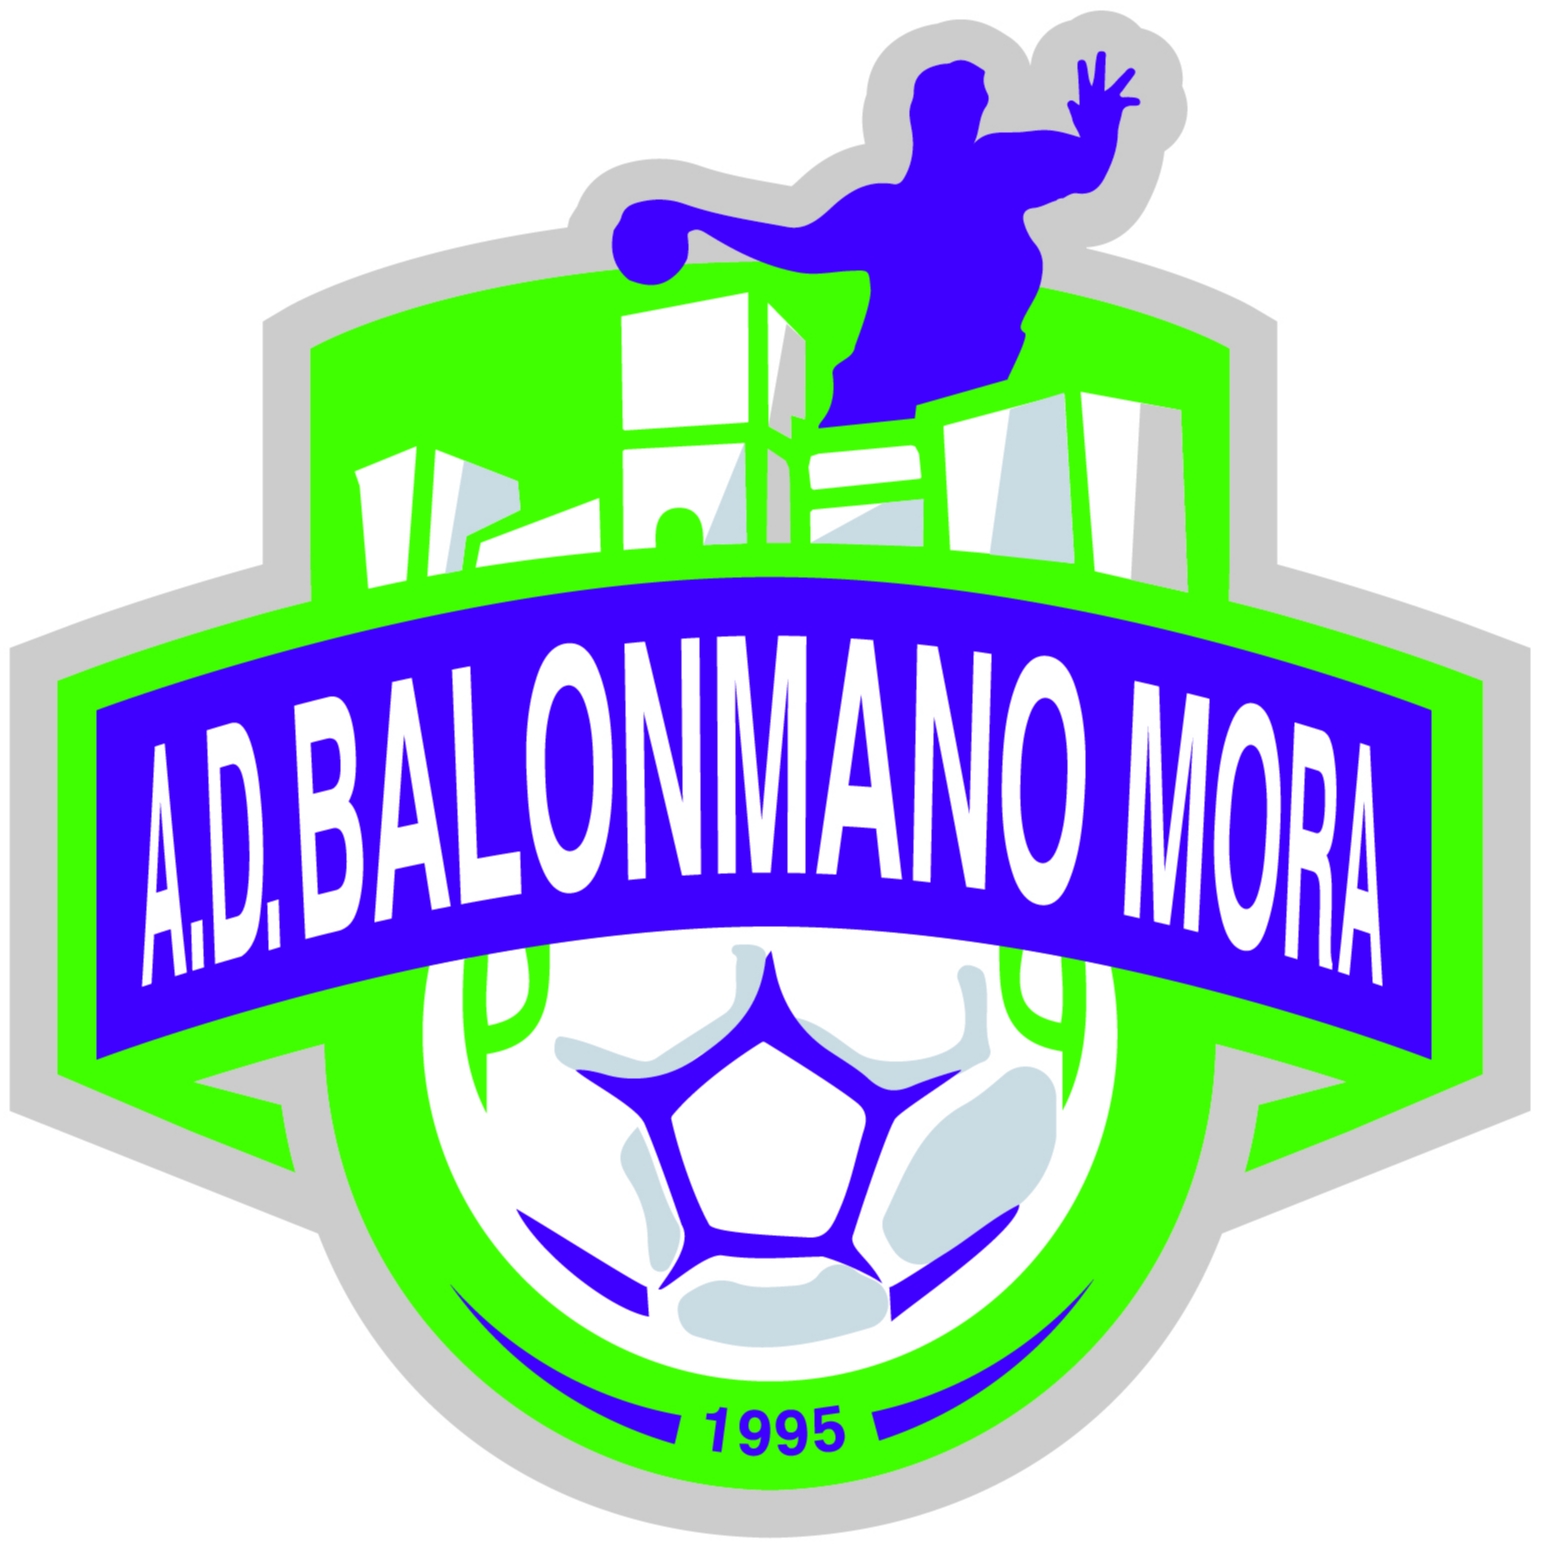 A.D BALONMANO MORA MX